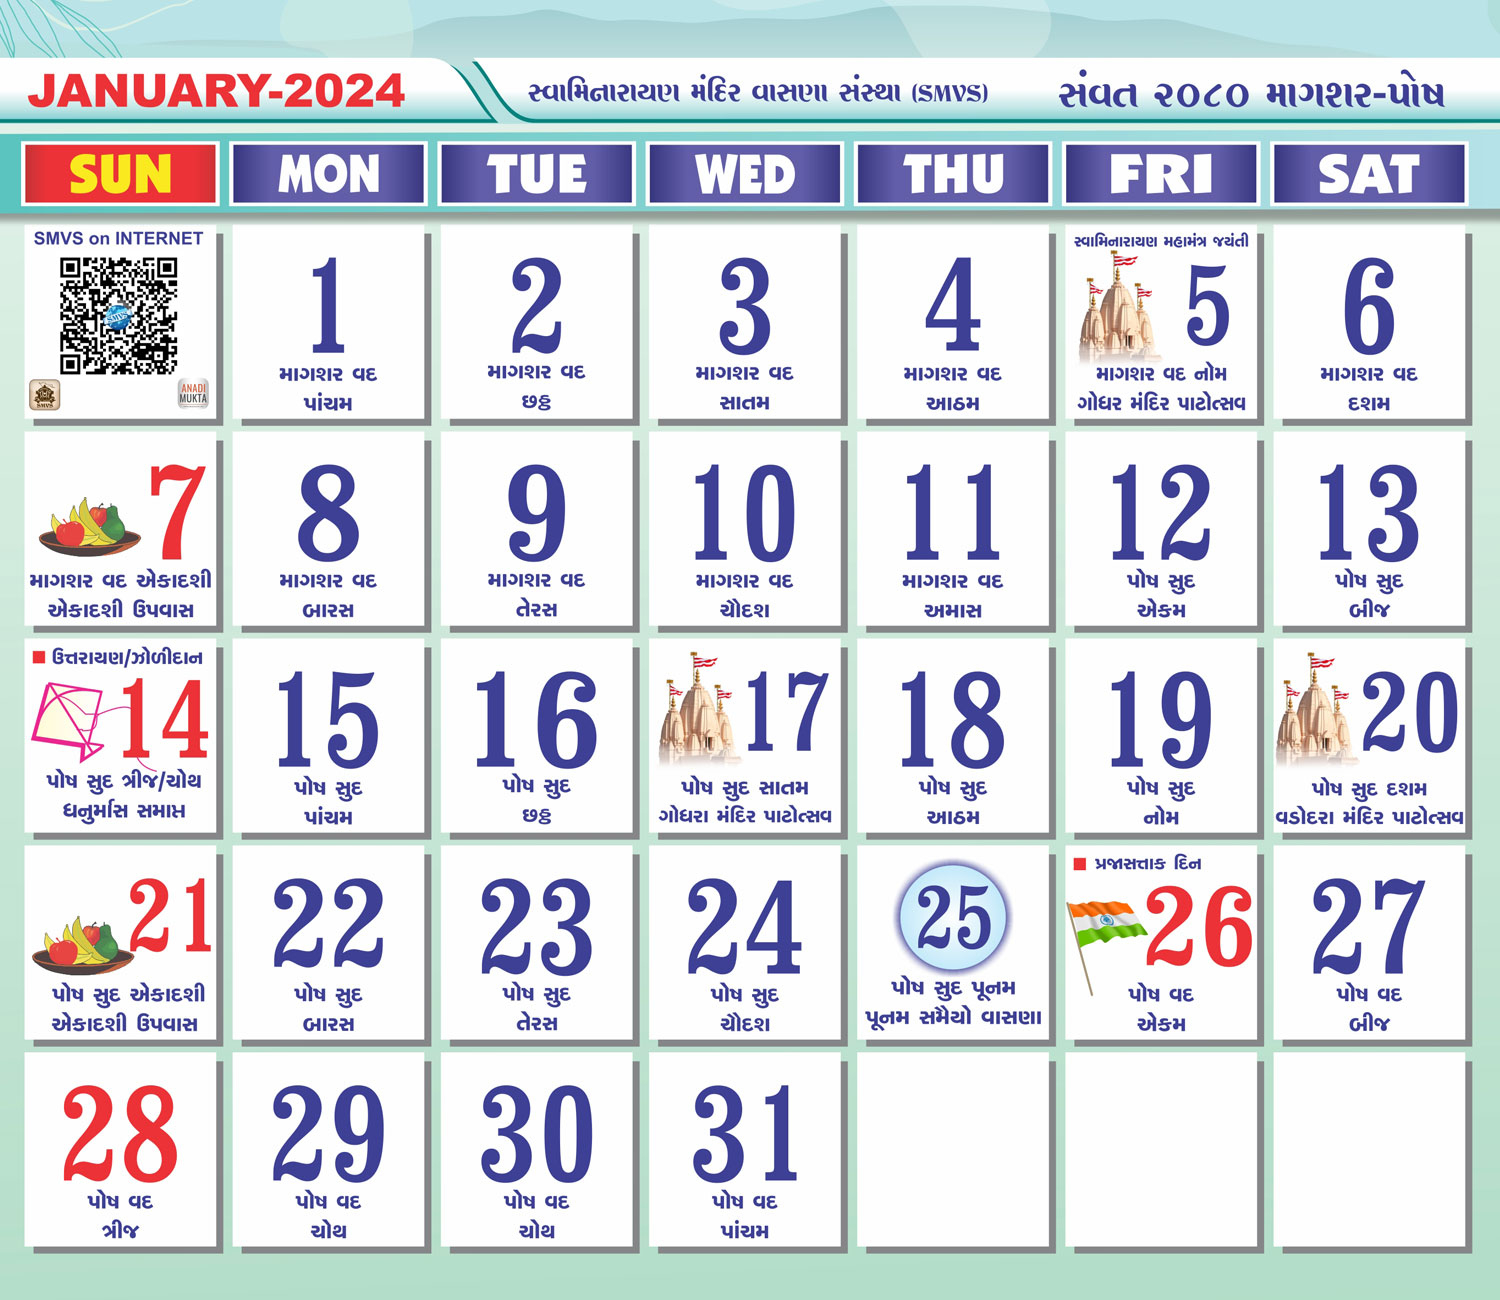 Swaminarayan Mandir Vasna Sanstha - Smvs | Baps Calendar 2024 July